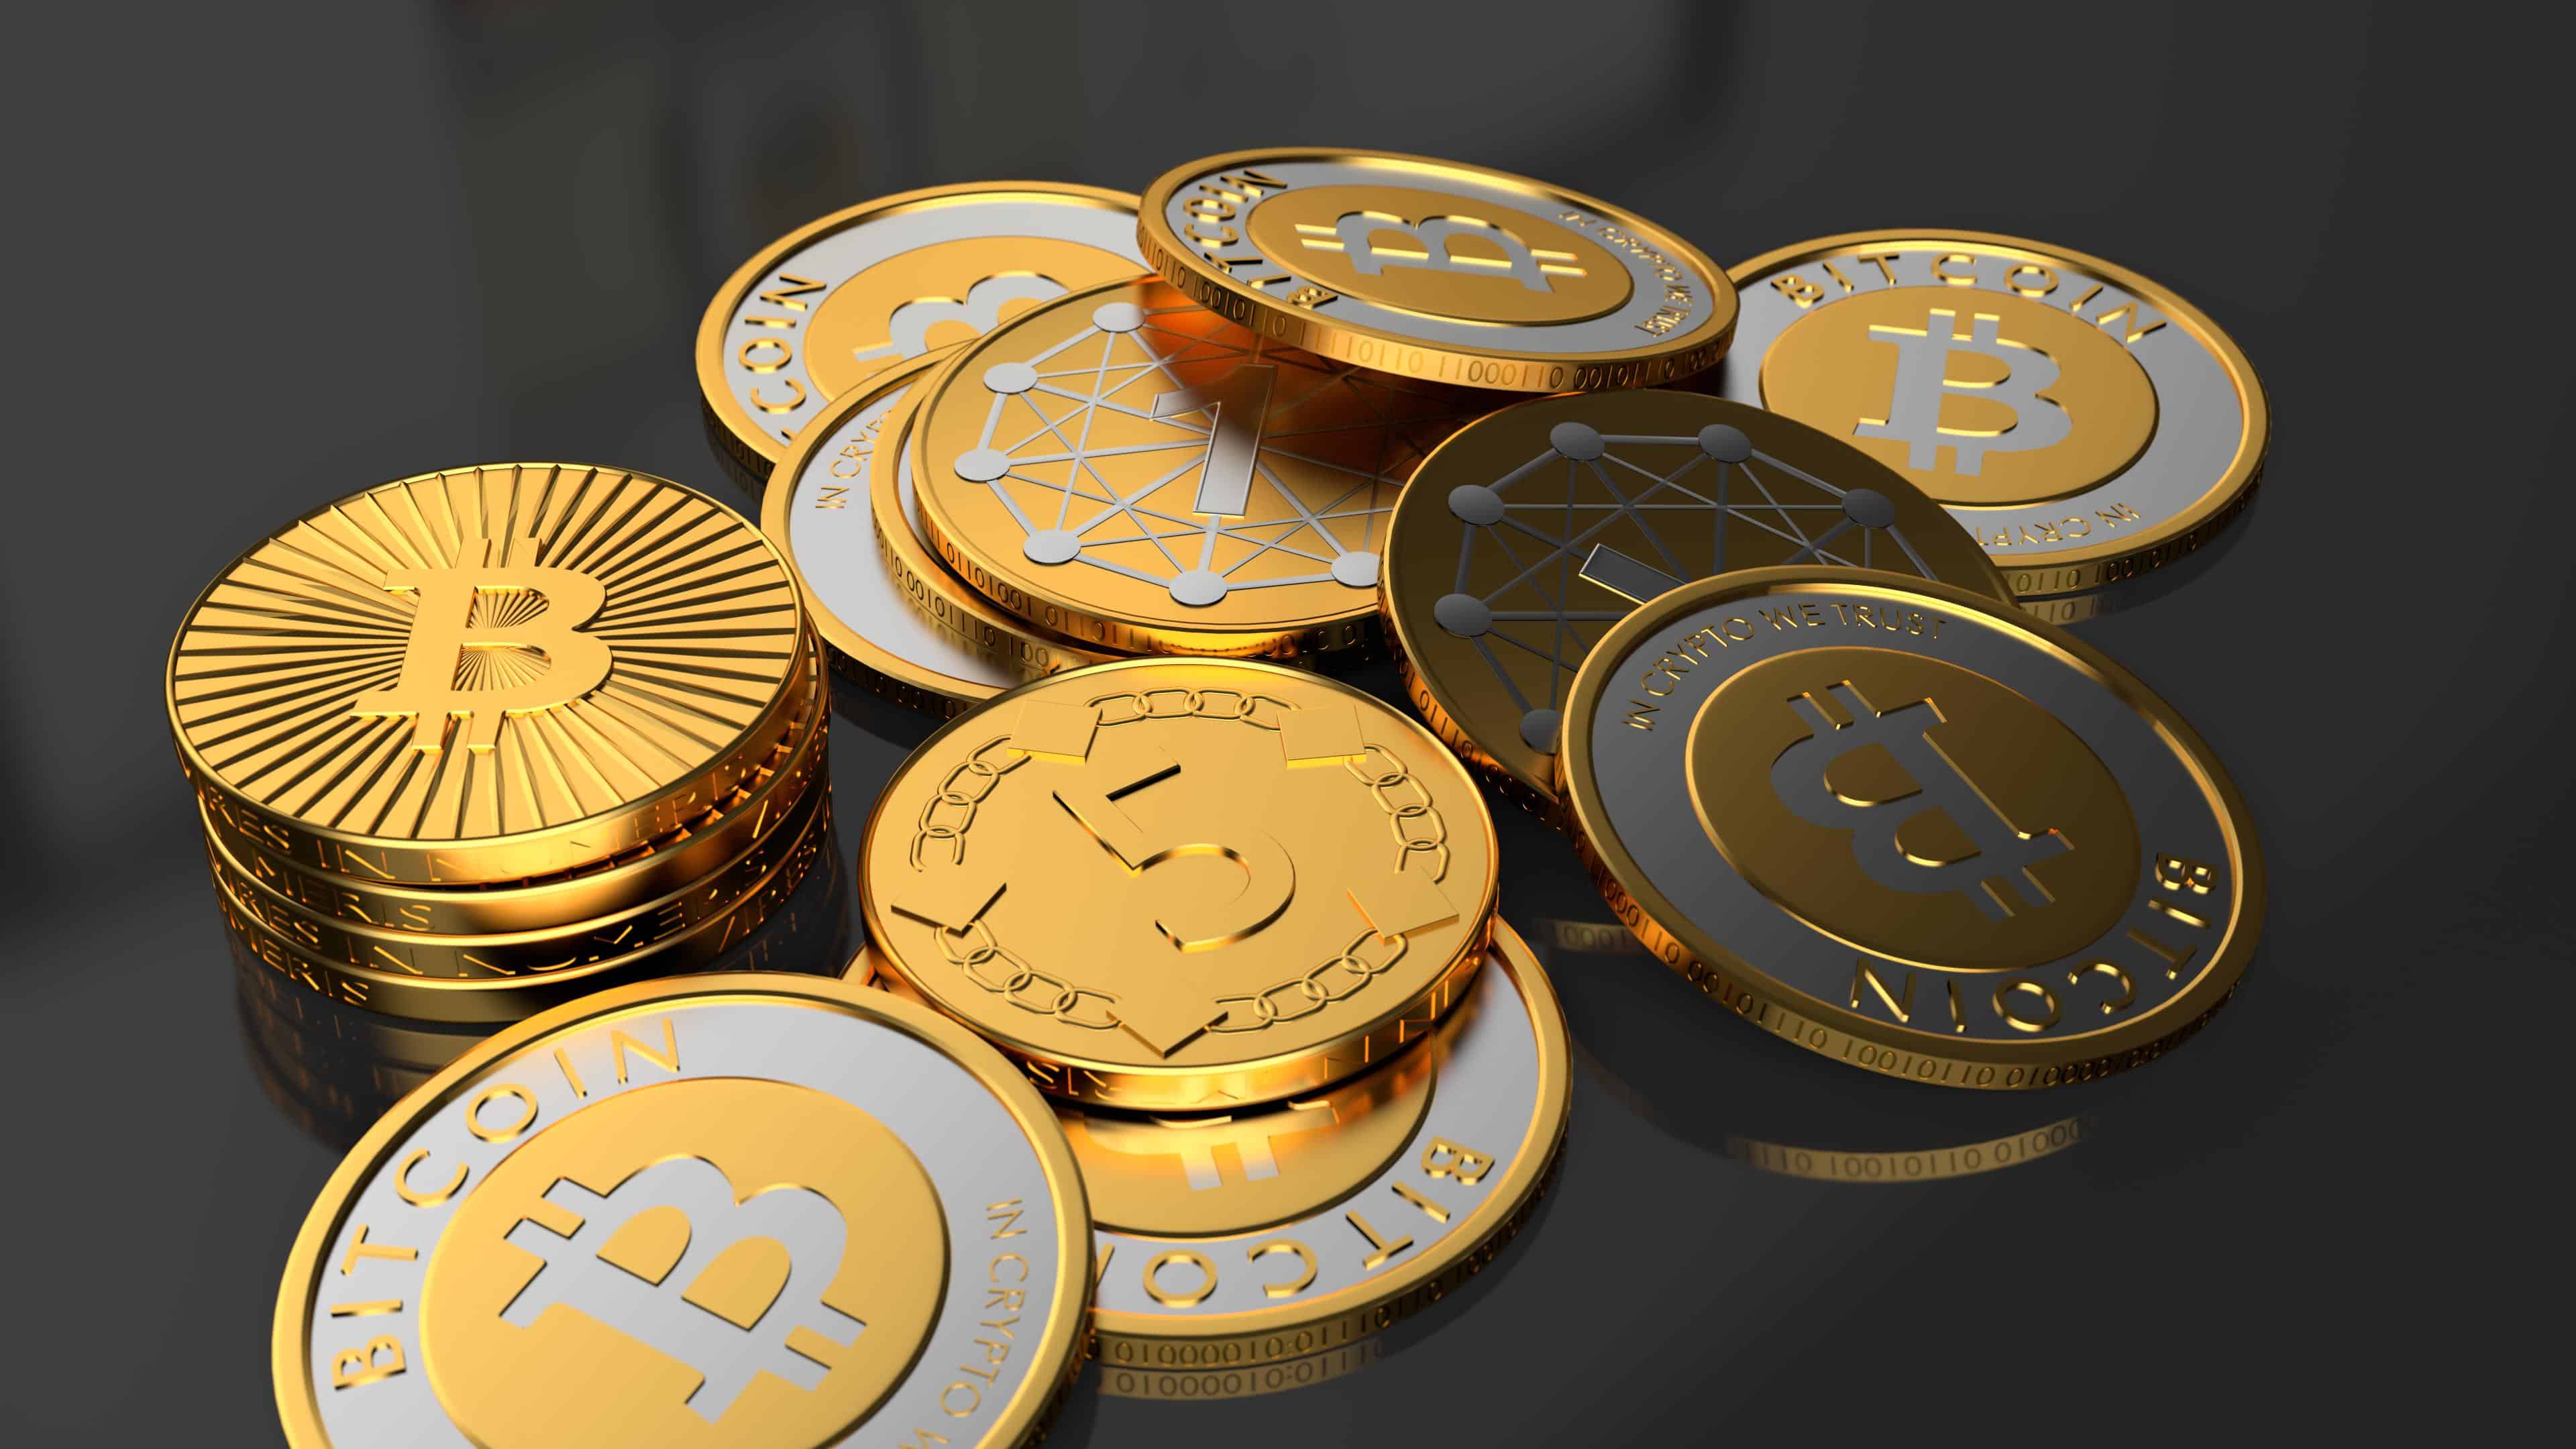 Bitcoin Coins UHD 4K Wallpaper - Pixelz.cc